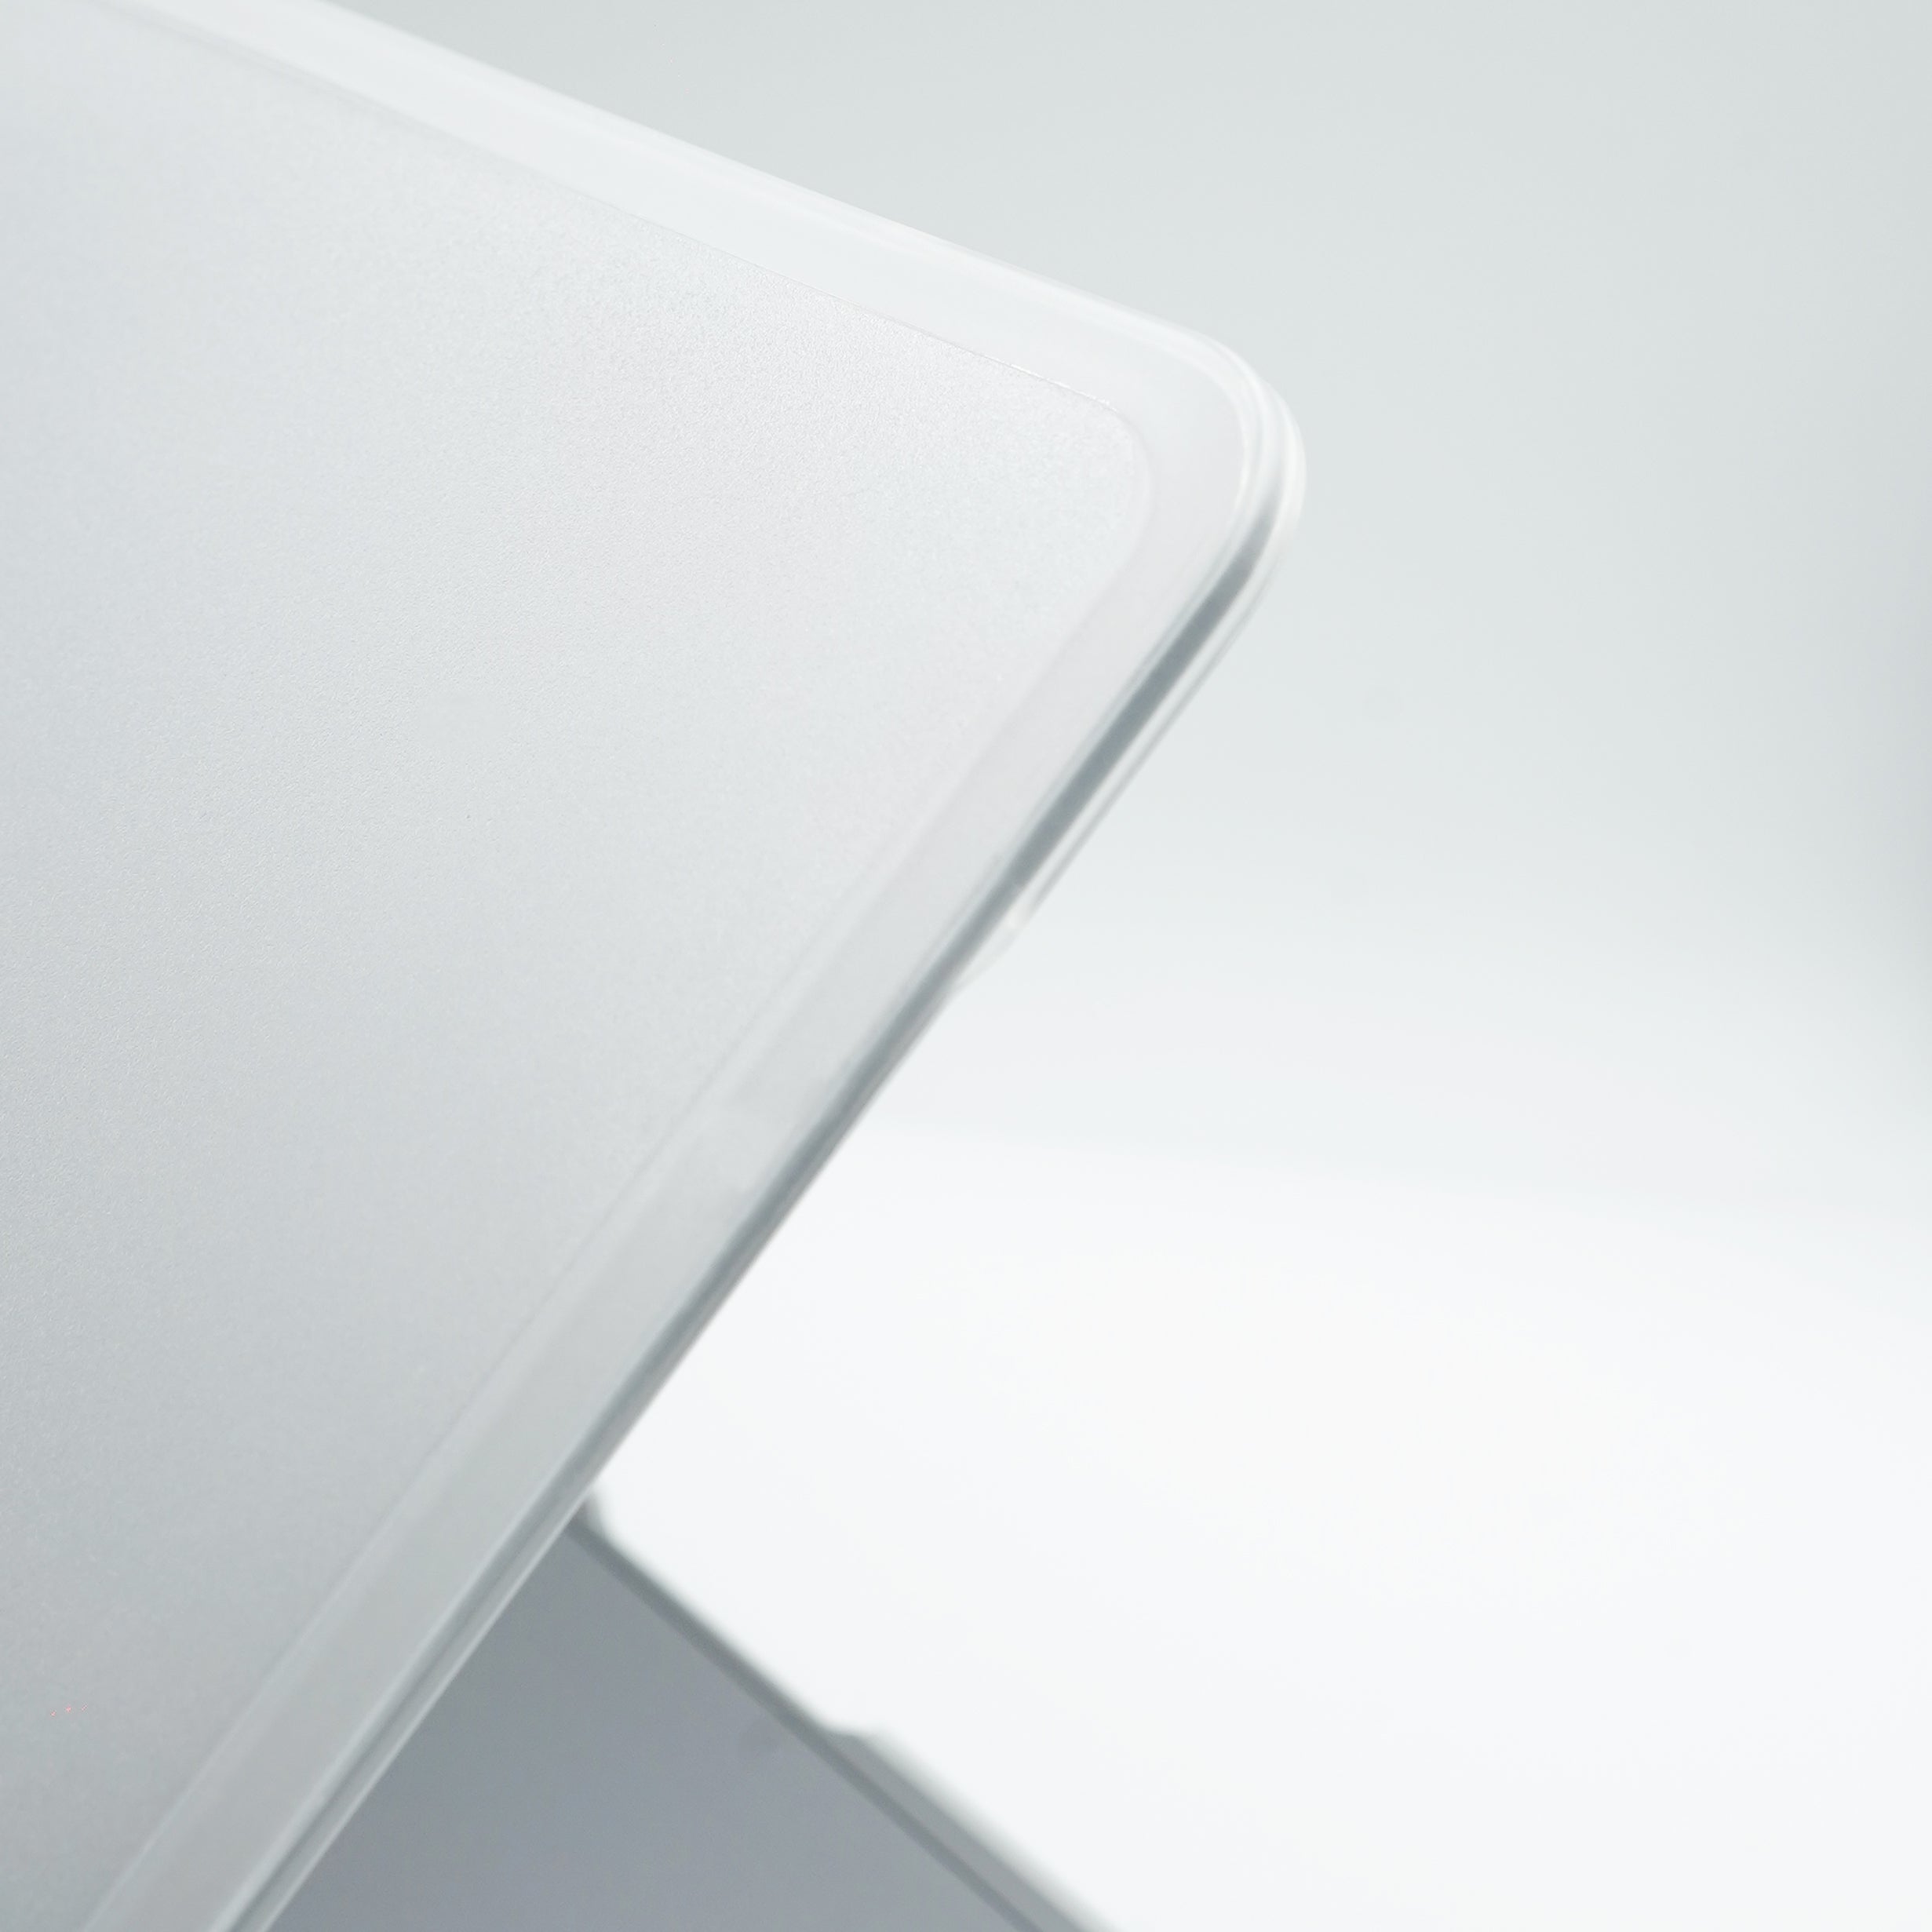 Armov MacBook Bianco & Clear